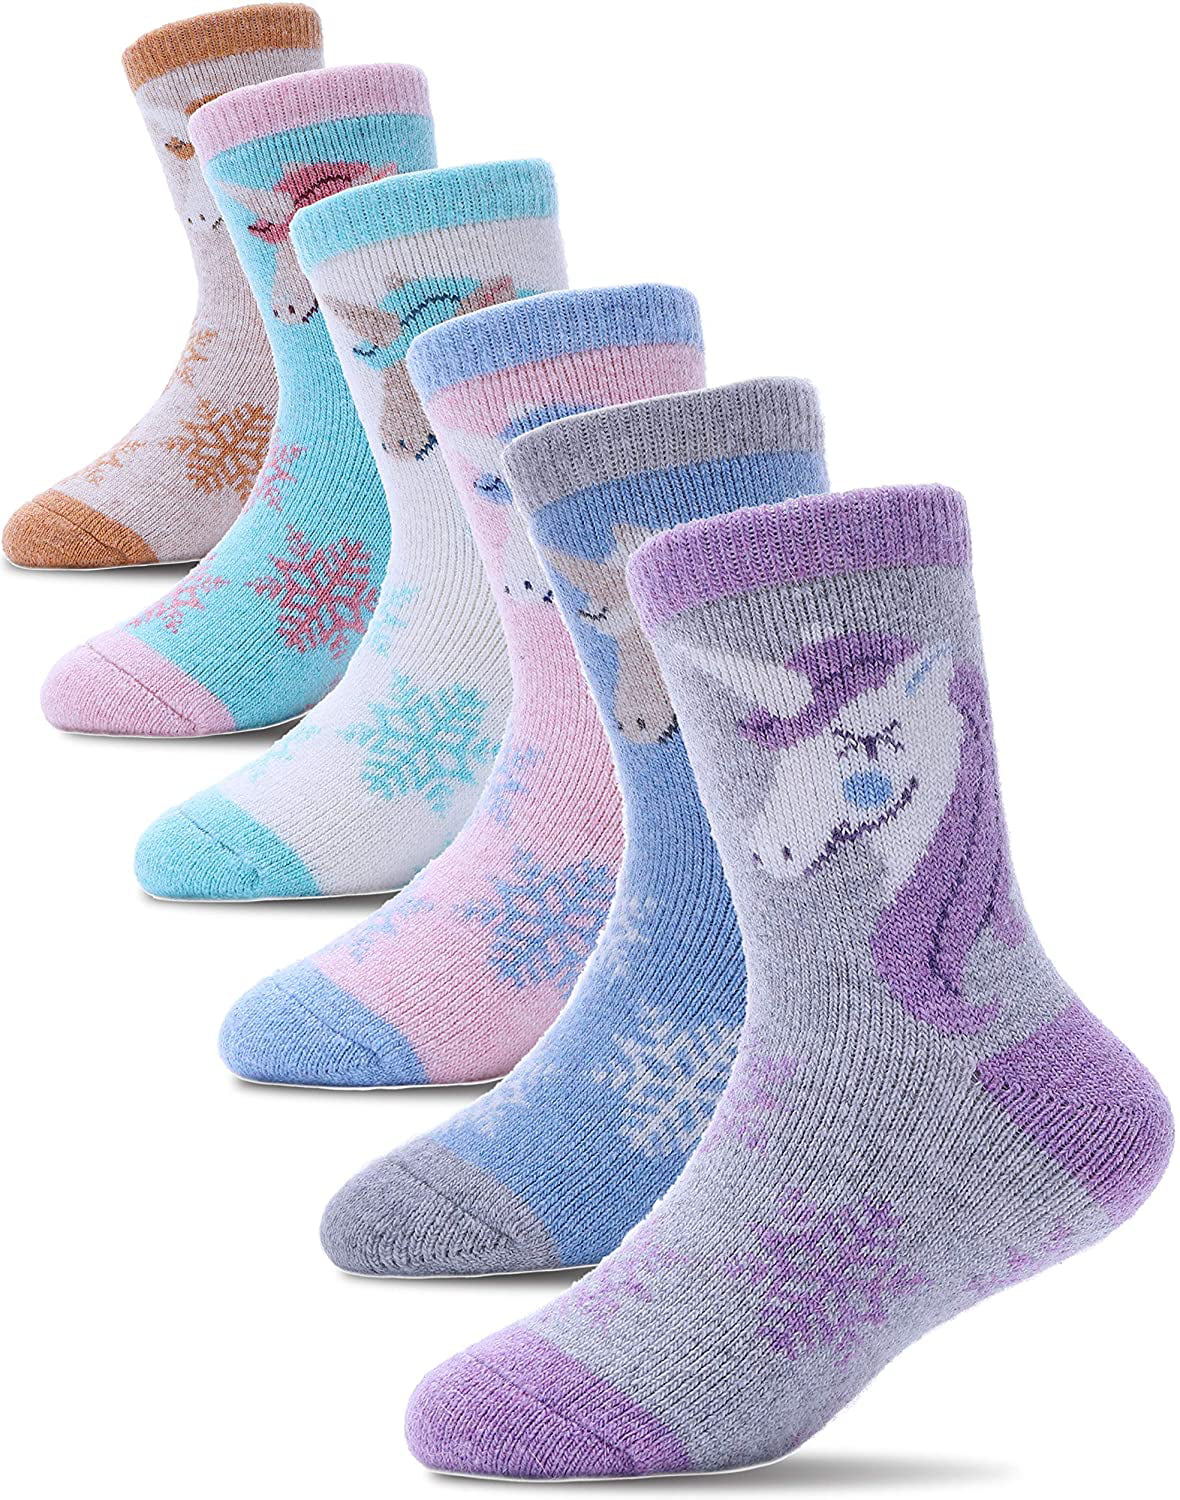 Boys Wool Socks Kids Winter Warm Thermal Crew Socks 6 Pack 